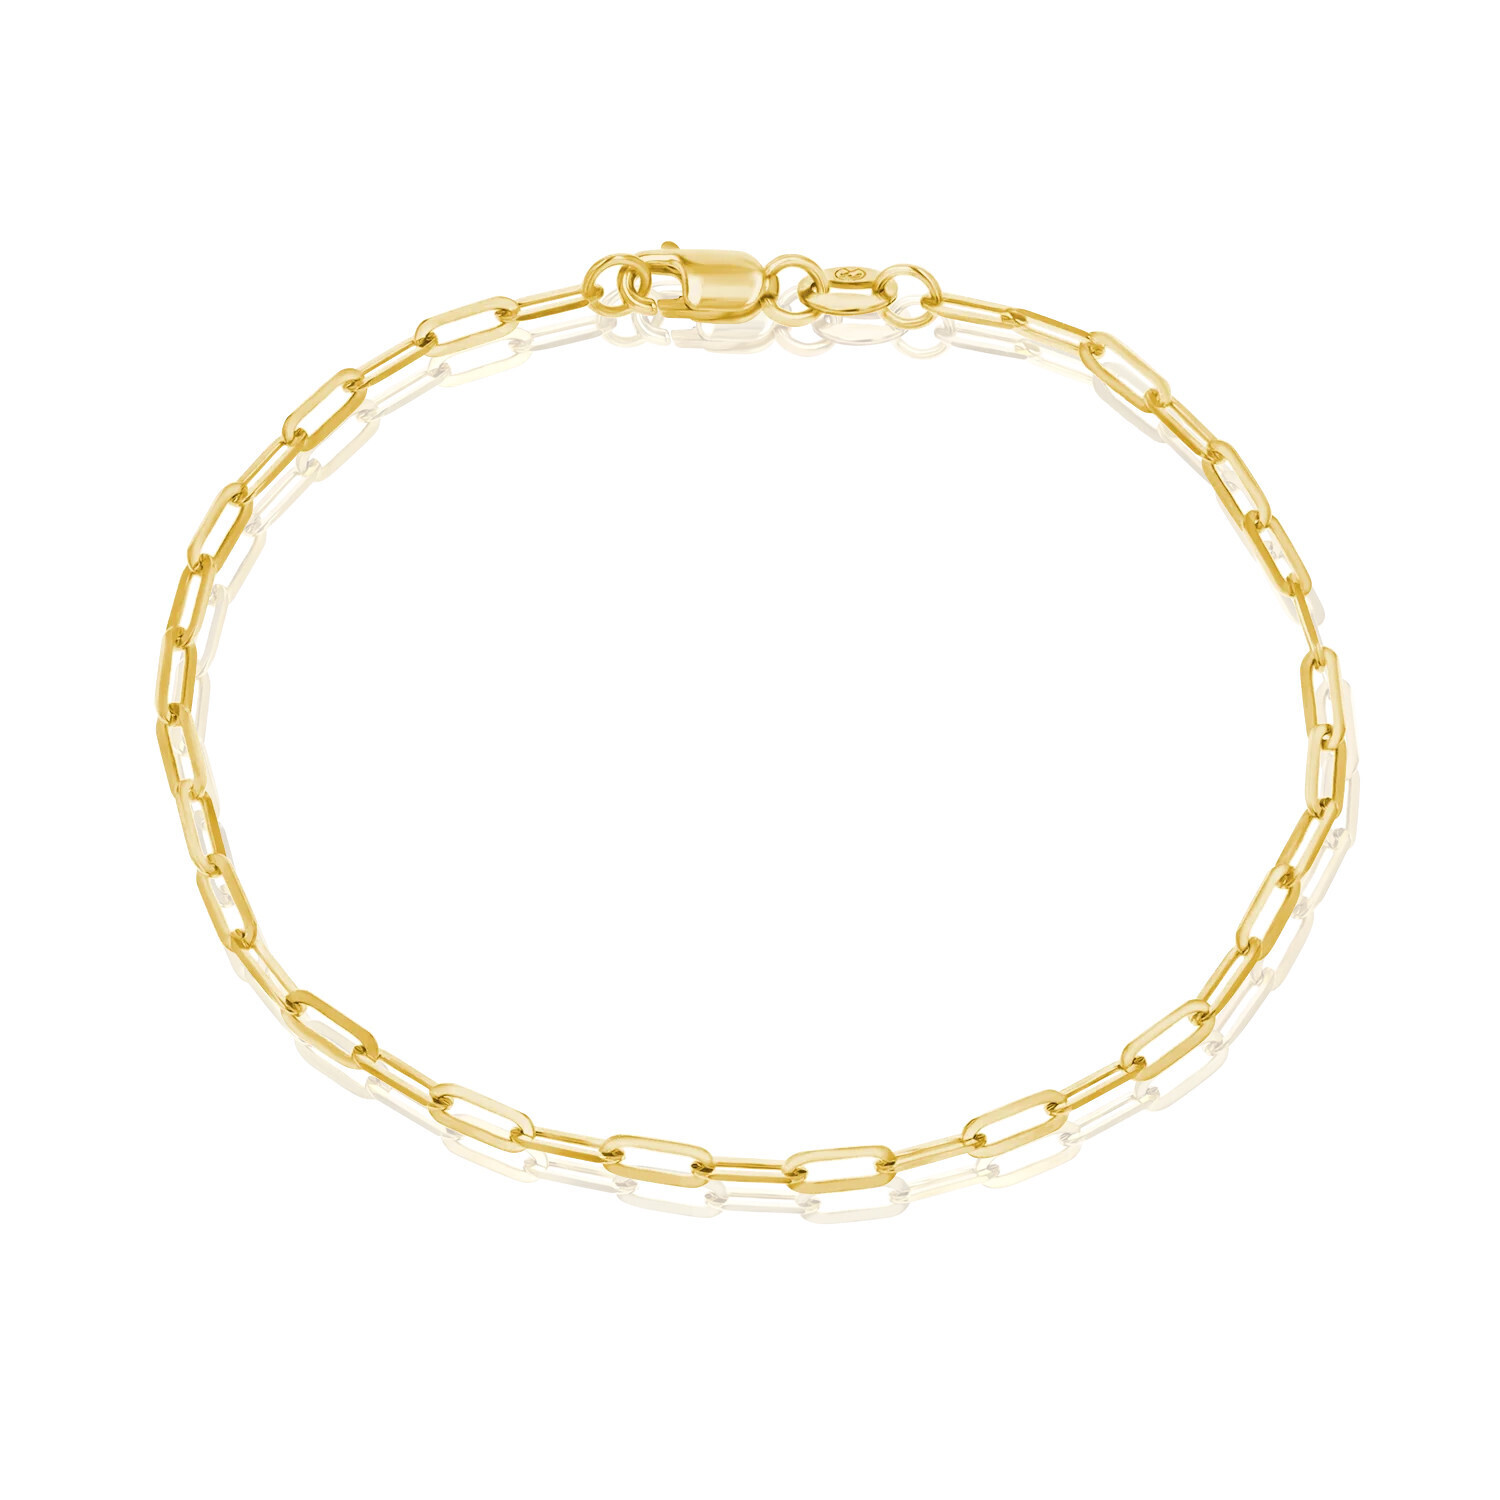 Oval Paperclip Bracelet - 14k Yellow Gold - 7" Long - 4.53 grams